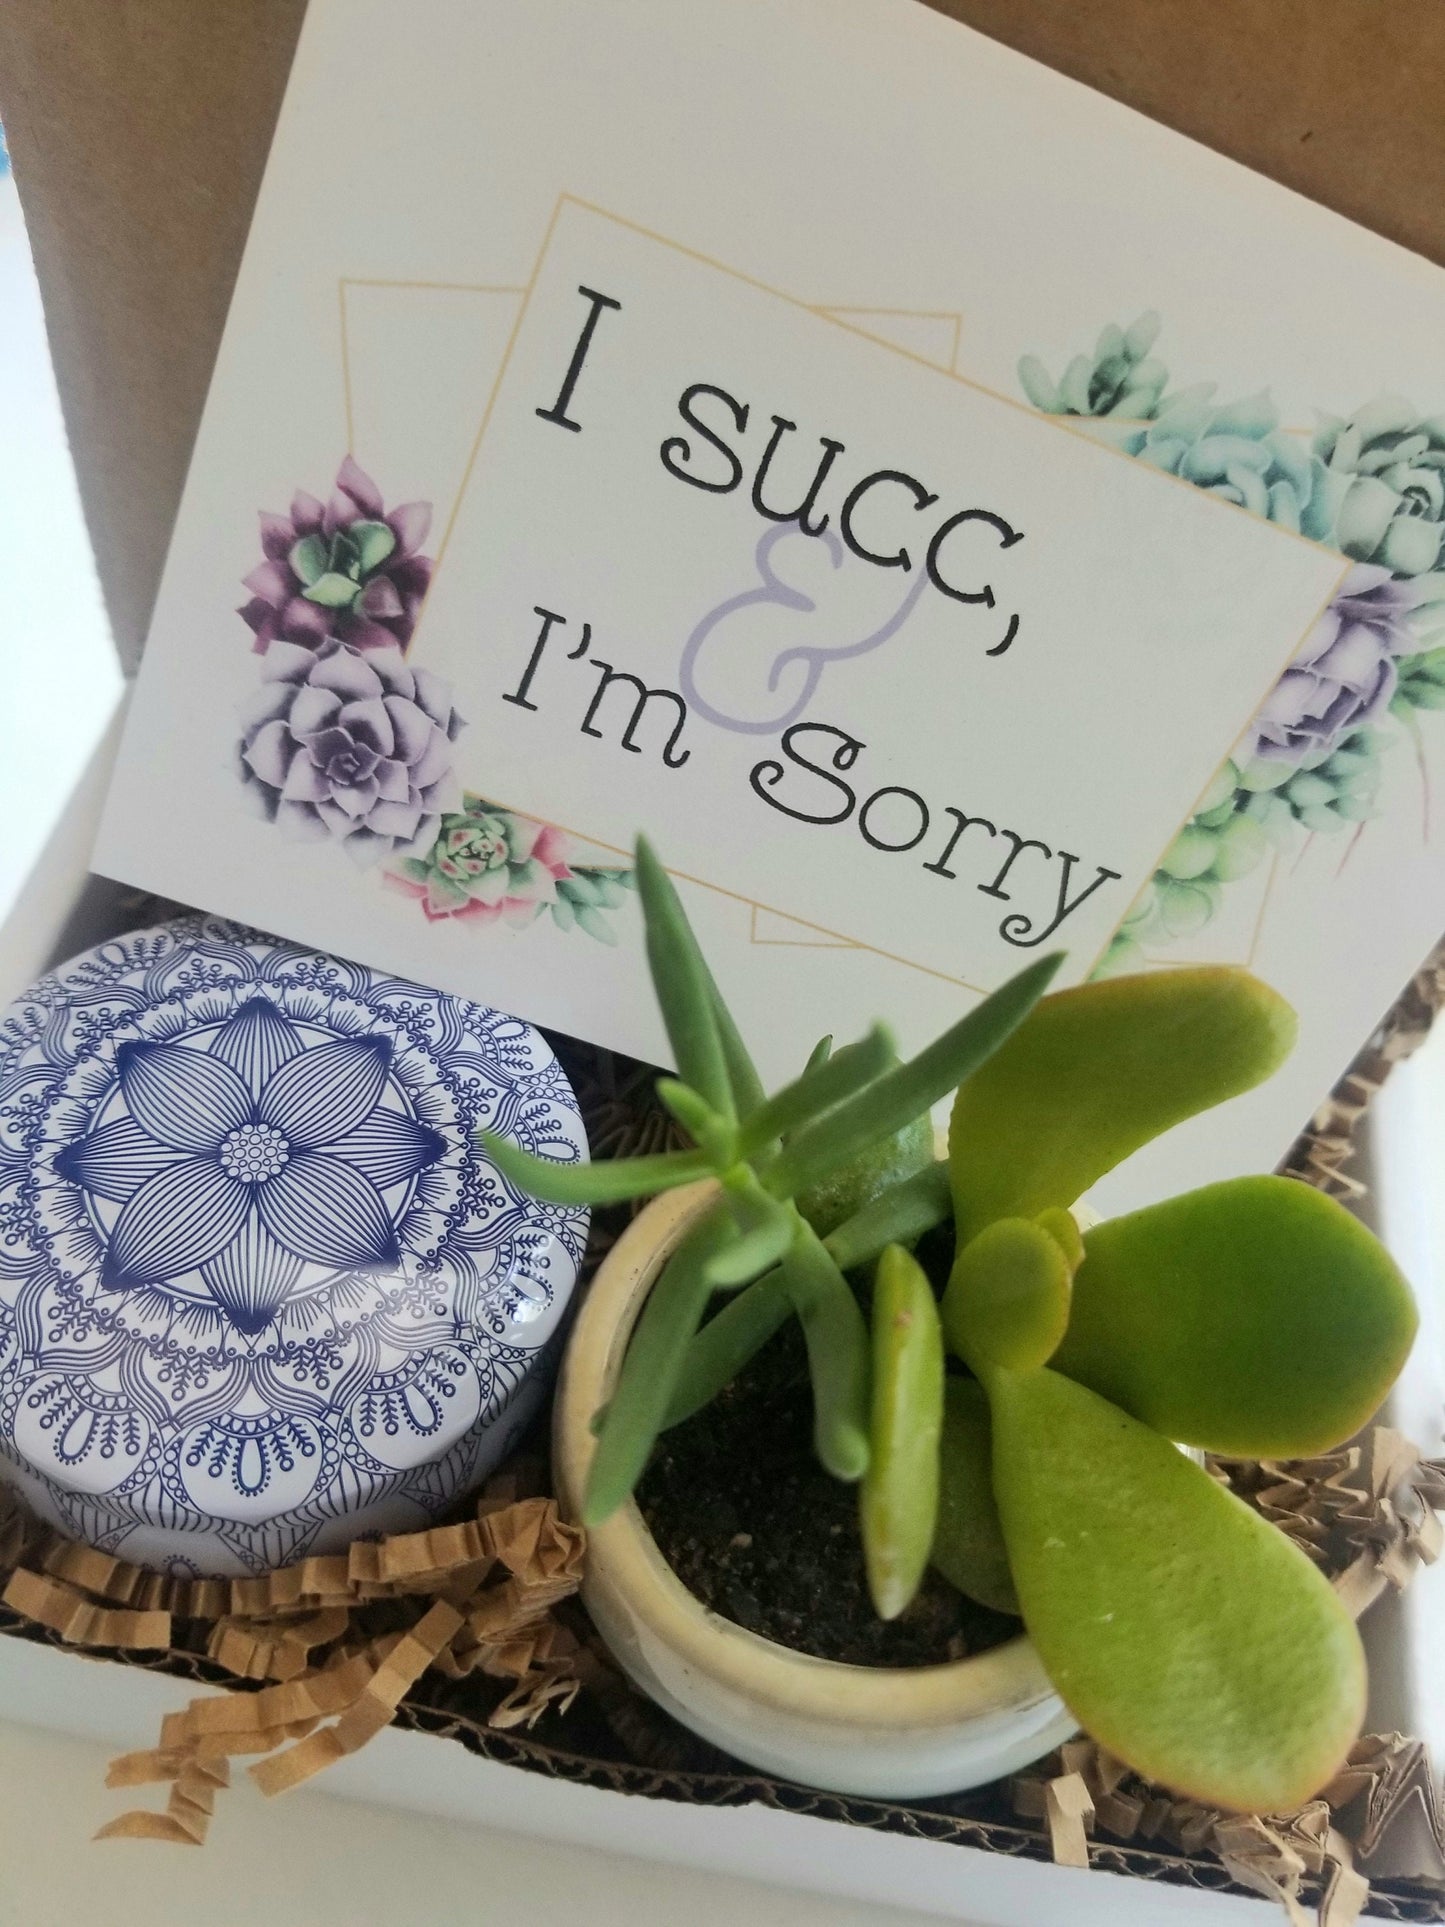 I Succ - I'm sorry - mini gift set. send an apology gift